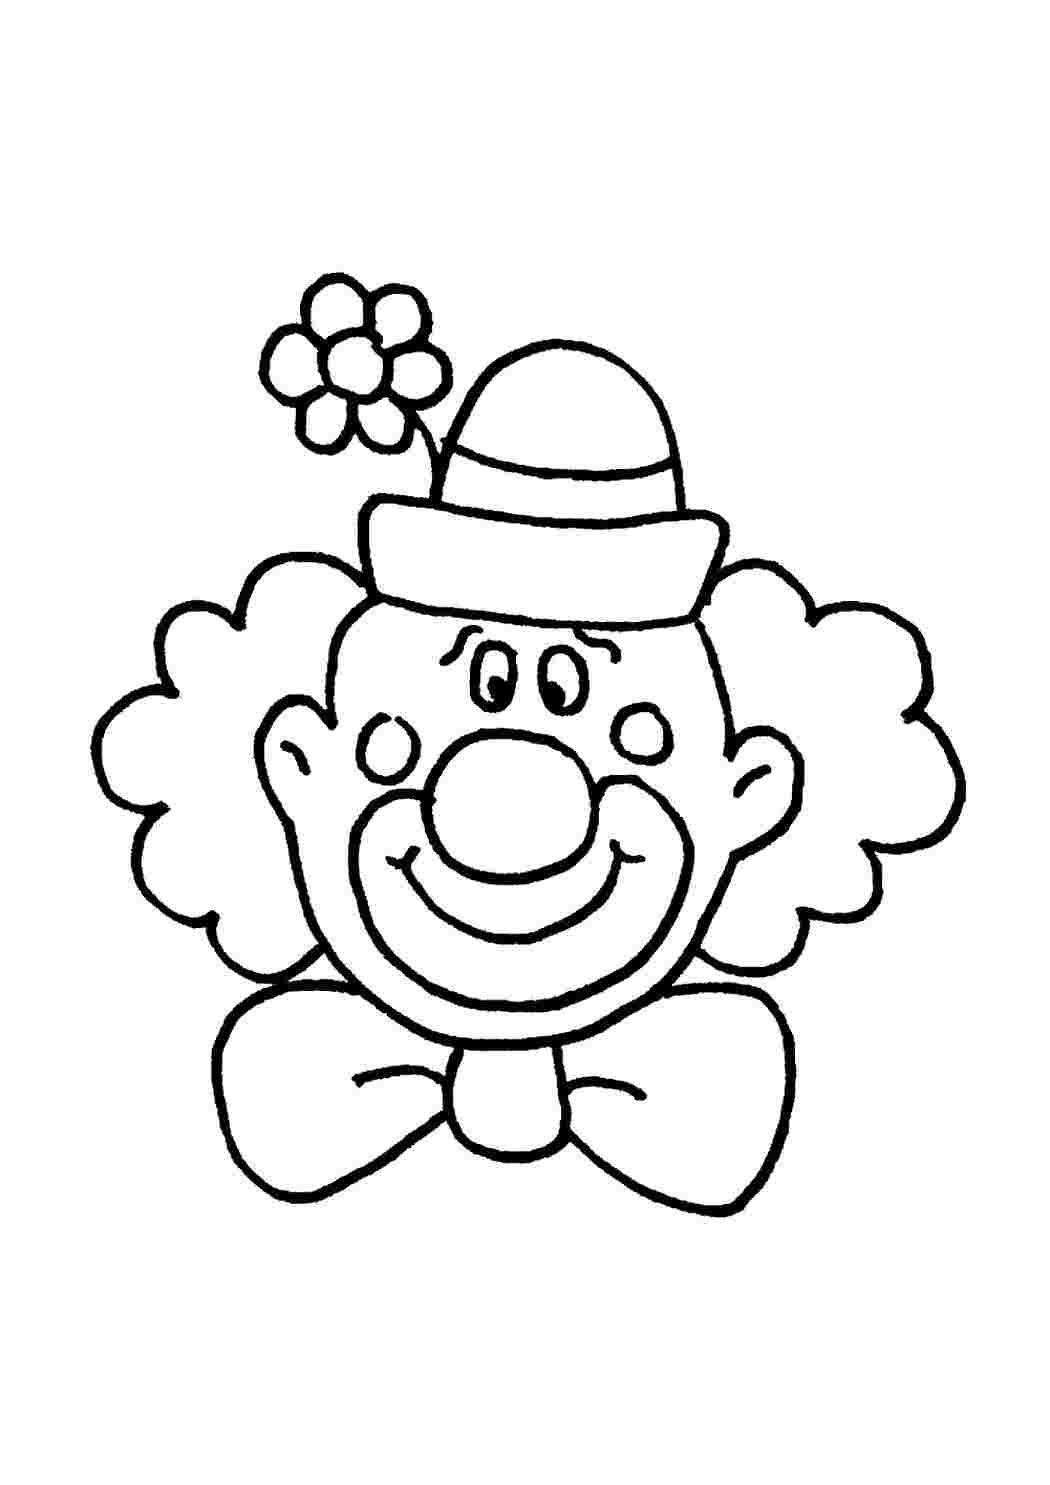 Раскраска клоун для детей 3 4 лет. Клоун раскраска. Клоун раскраска для детей. Веселый клоун раскраска. Раскраска весёлый клоун для детей.